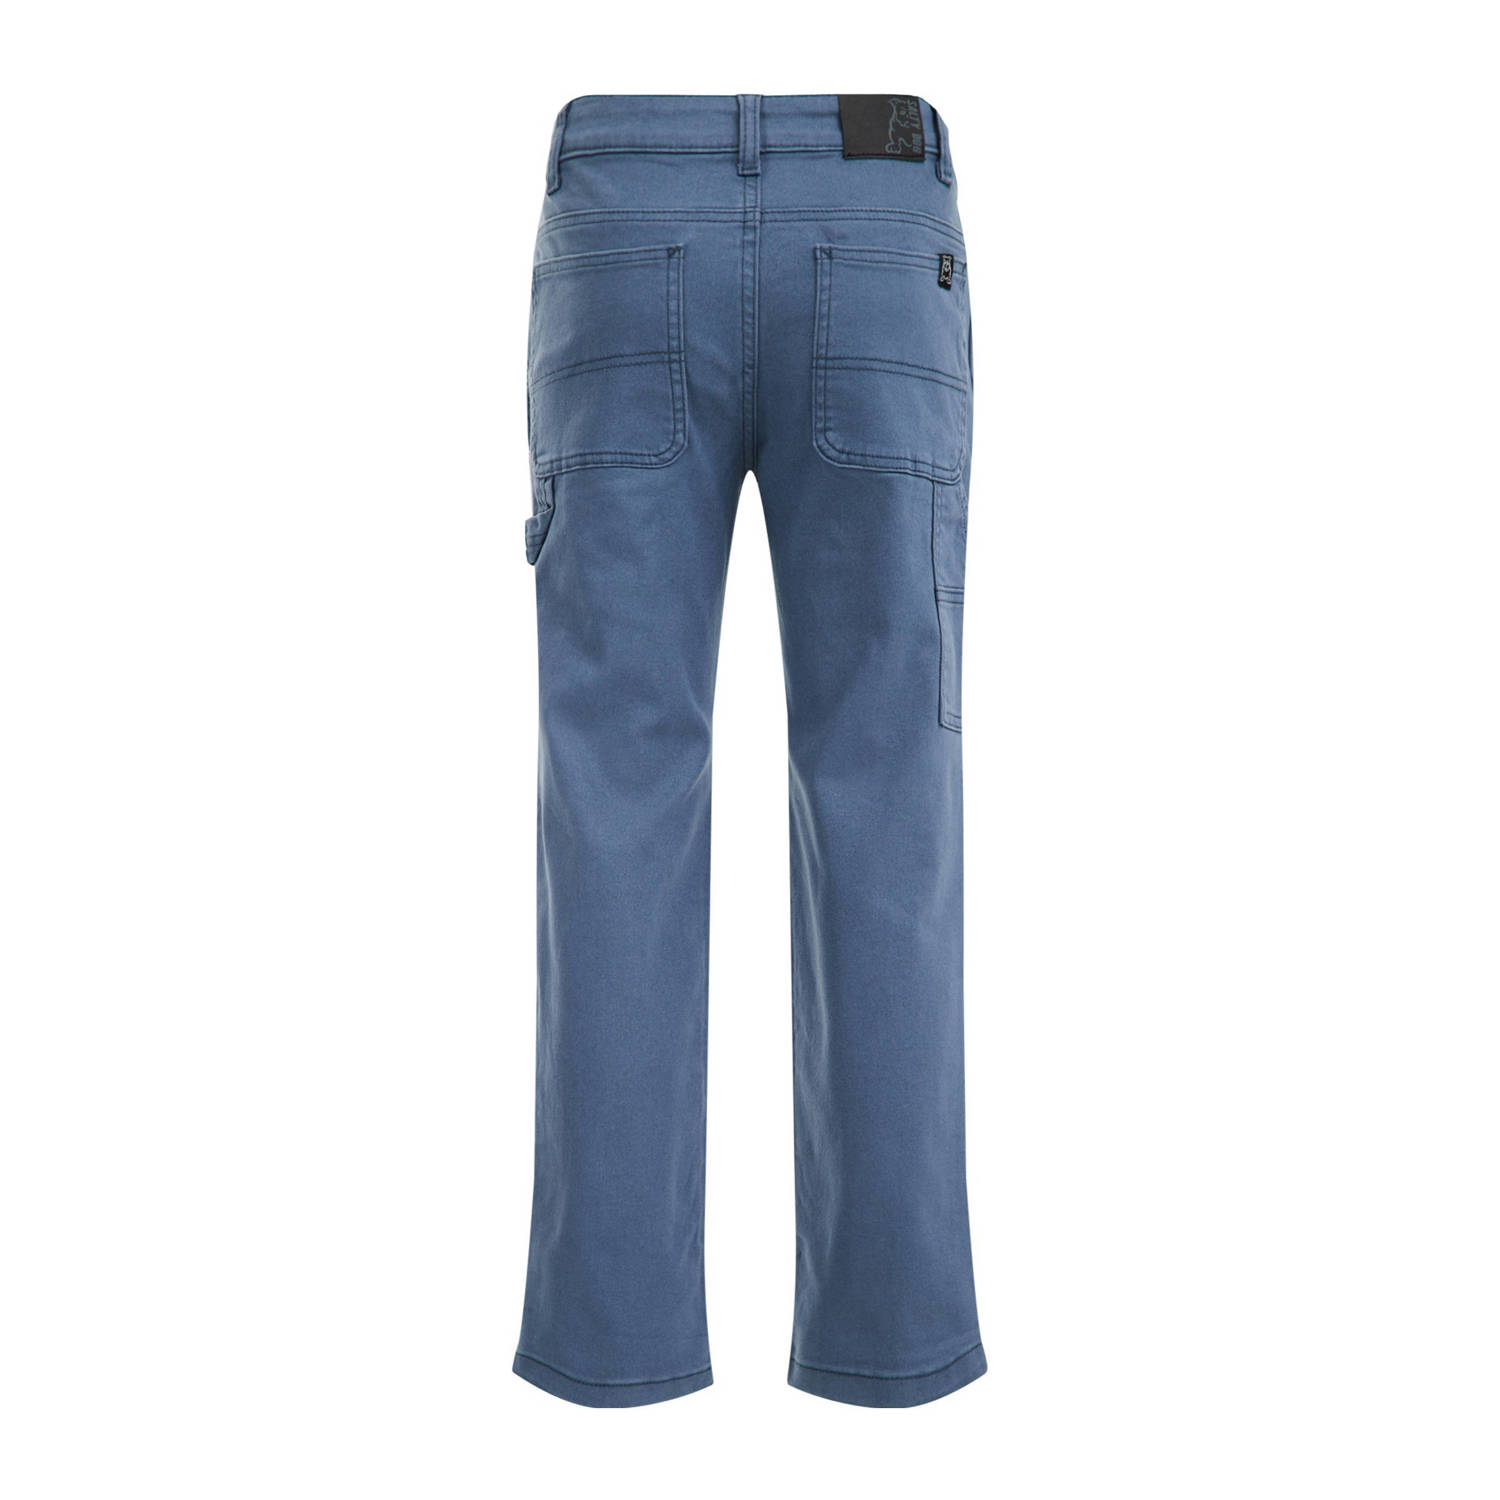 WE Fashion straight fit jeans medium blue denim